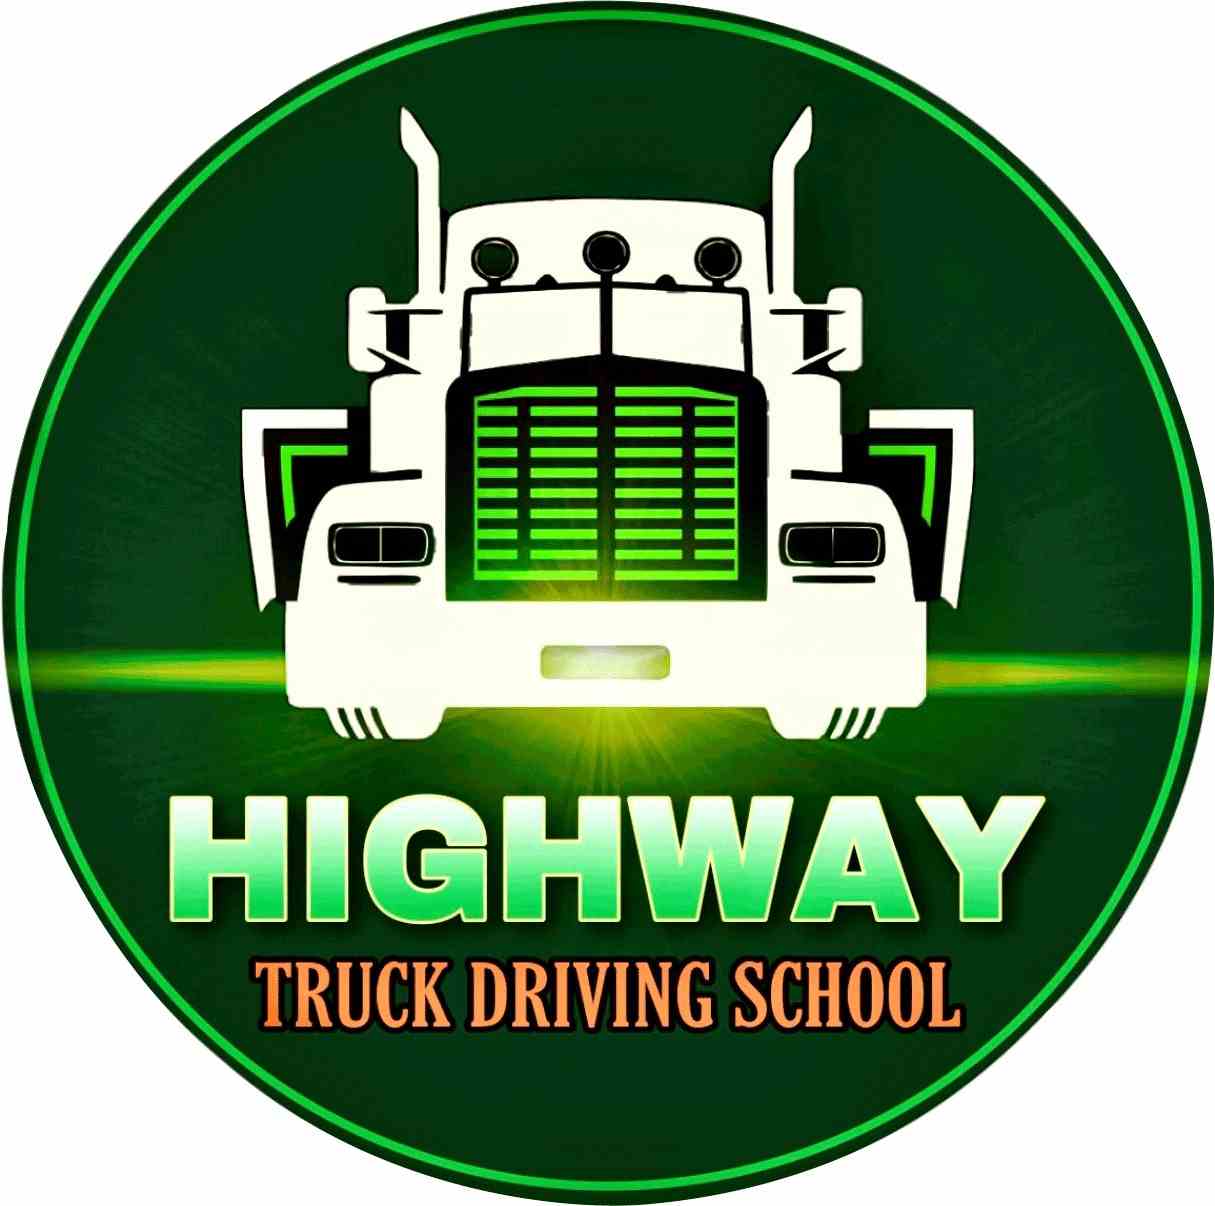 Learn from best Truck Driving School in sydney by Highway truck drving school